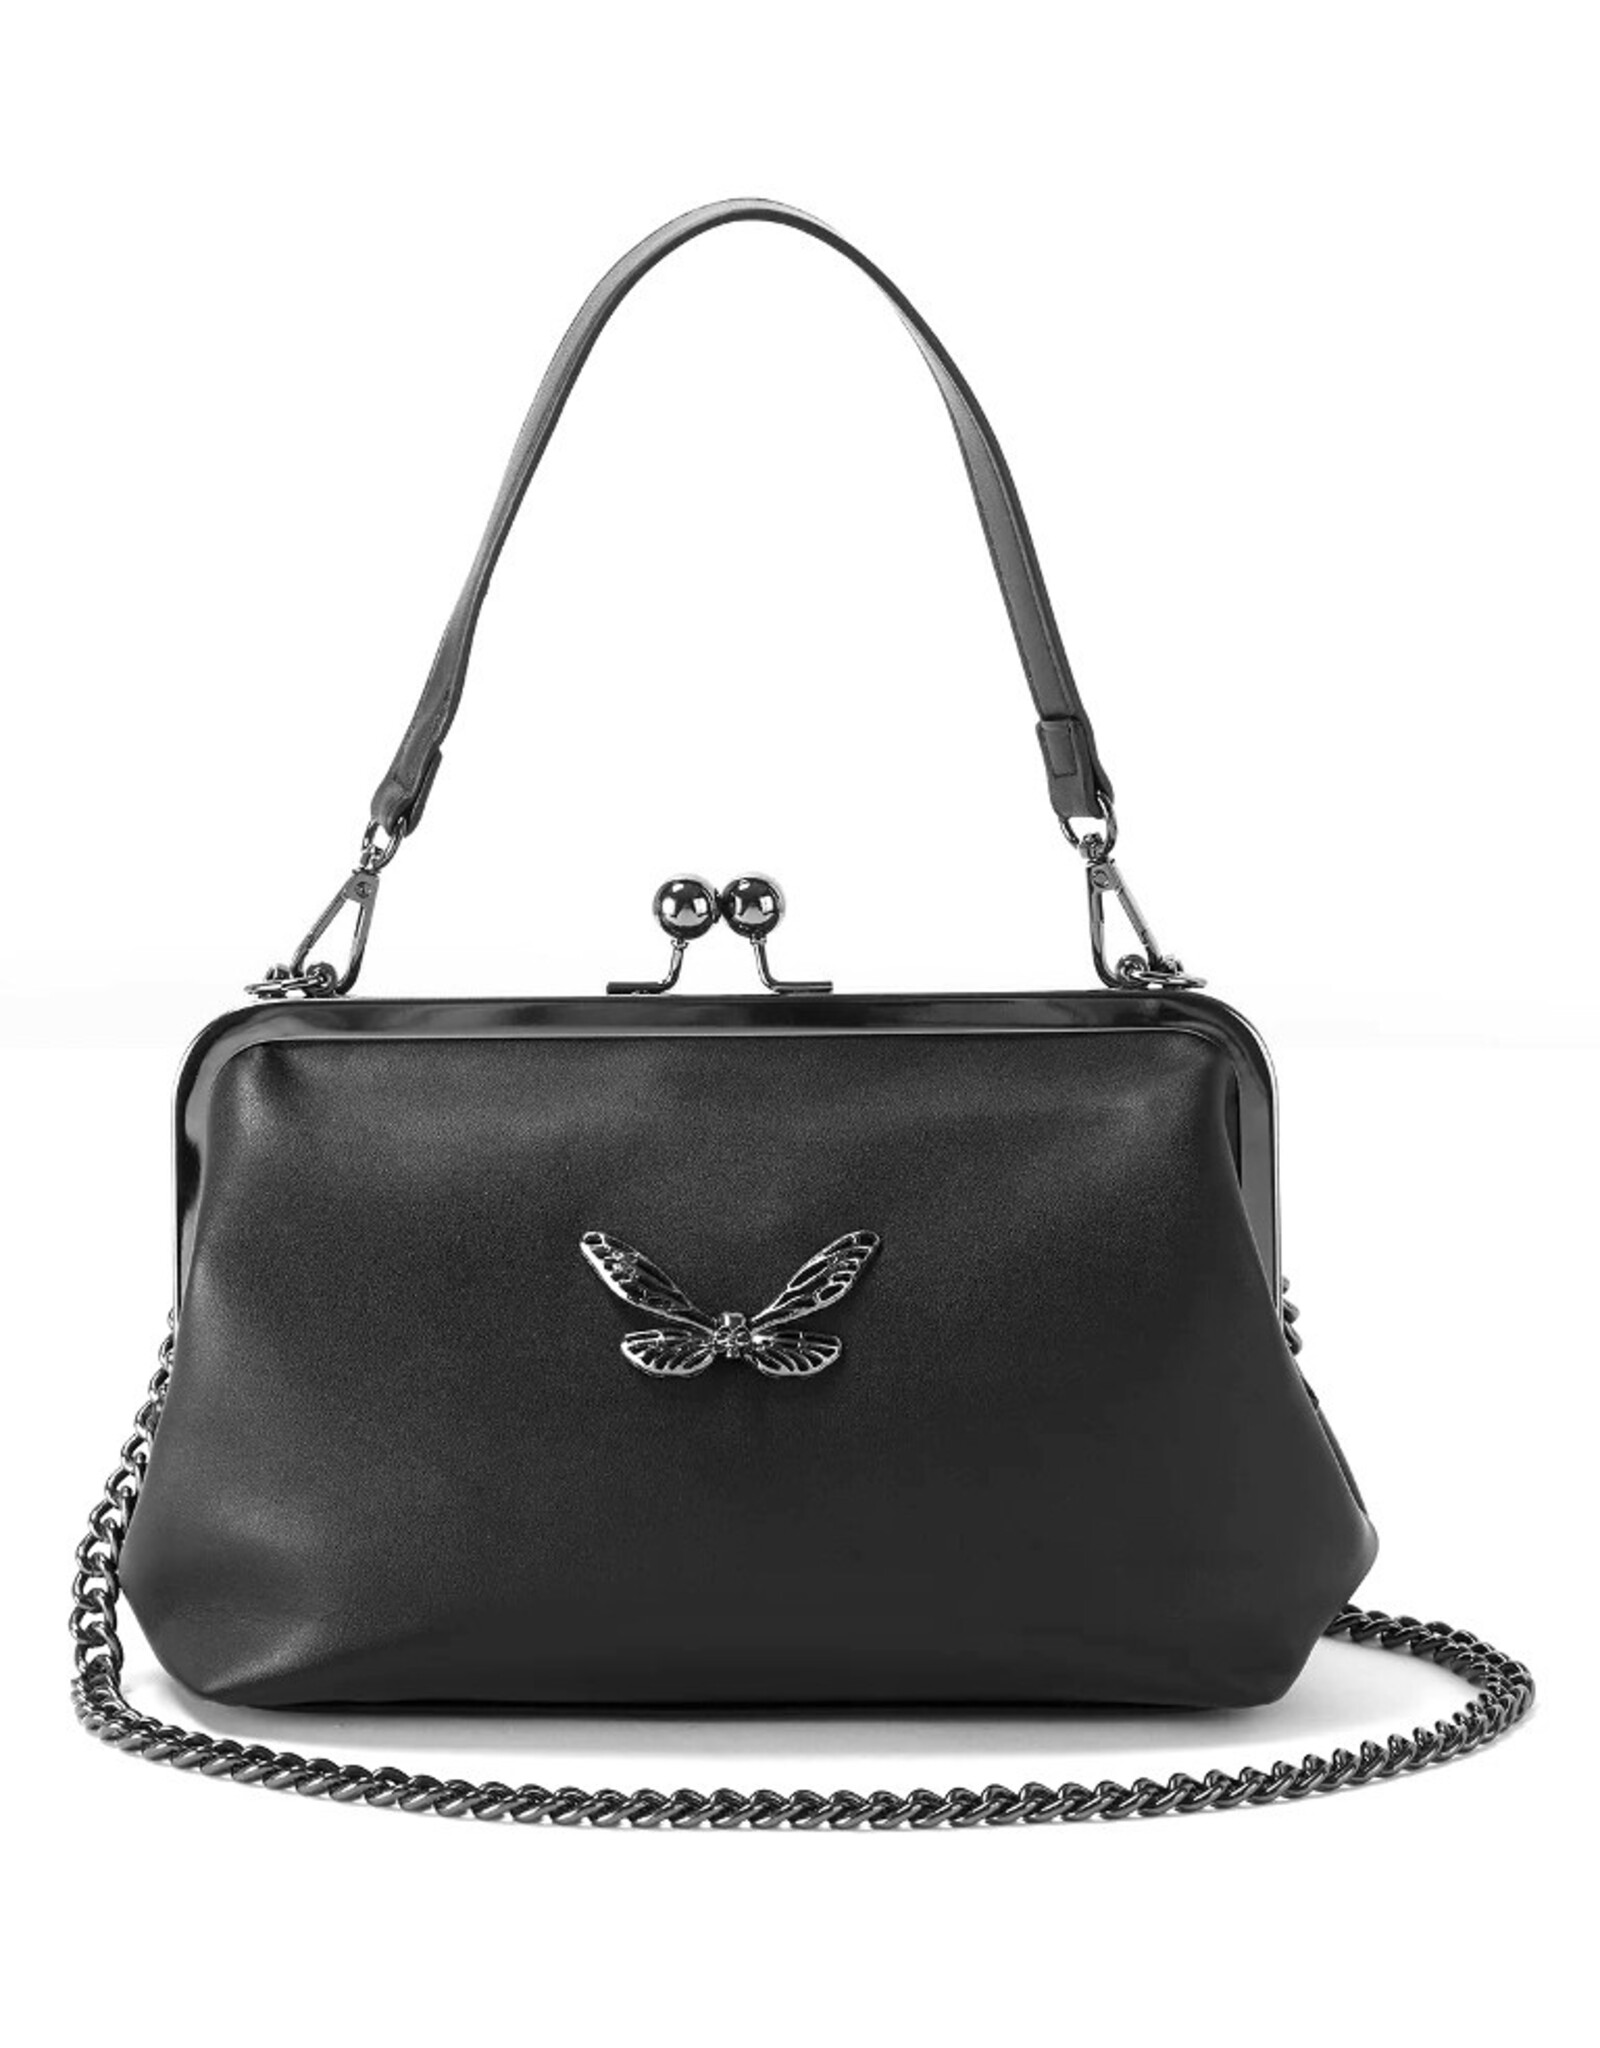 Killstar Gothic bags Steampunk bags - Charming Shroom handbag Killstar